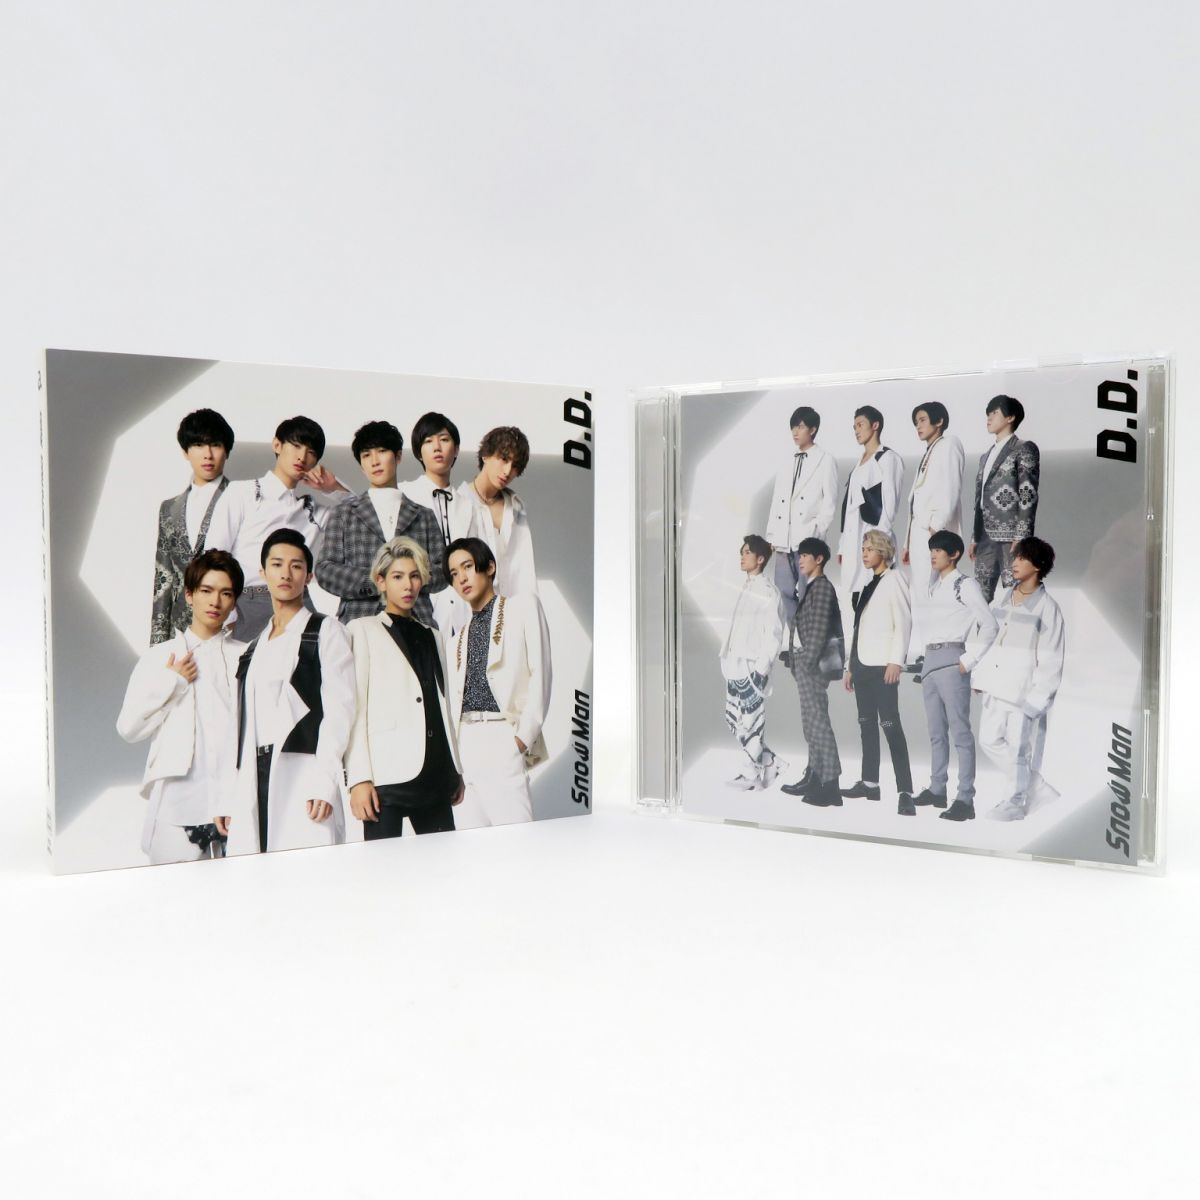 025s CD+DVD / CD Snow Man D.D. / Imitation Rain 初回盤・with SixTONES盤・通常盤 セット ※中古_画像5